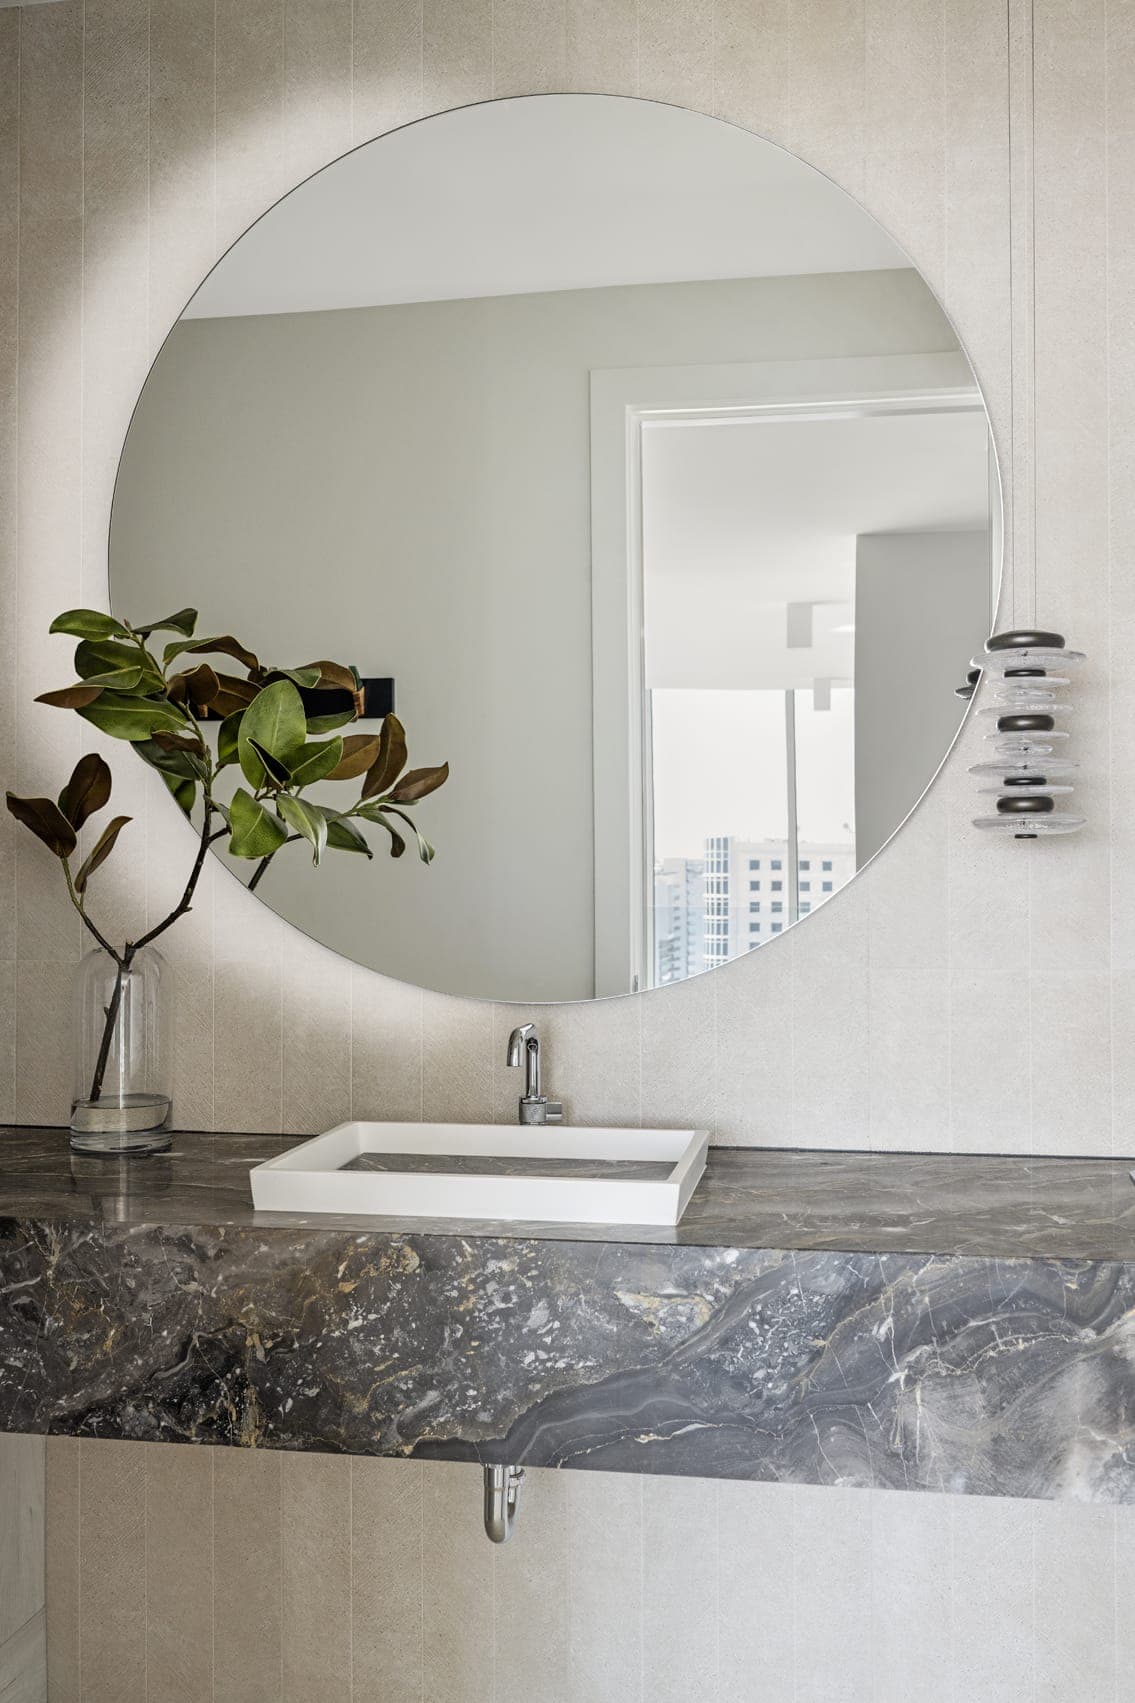 Jkl Penthouse The Blvd Grey Tile Powder Bath With Granite Countertop Circular Mirror